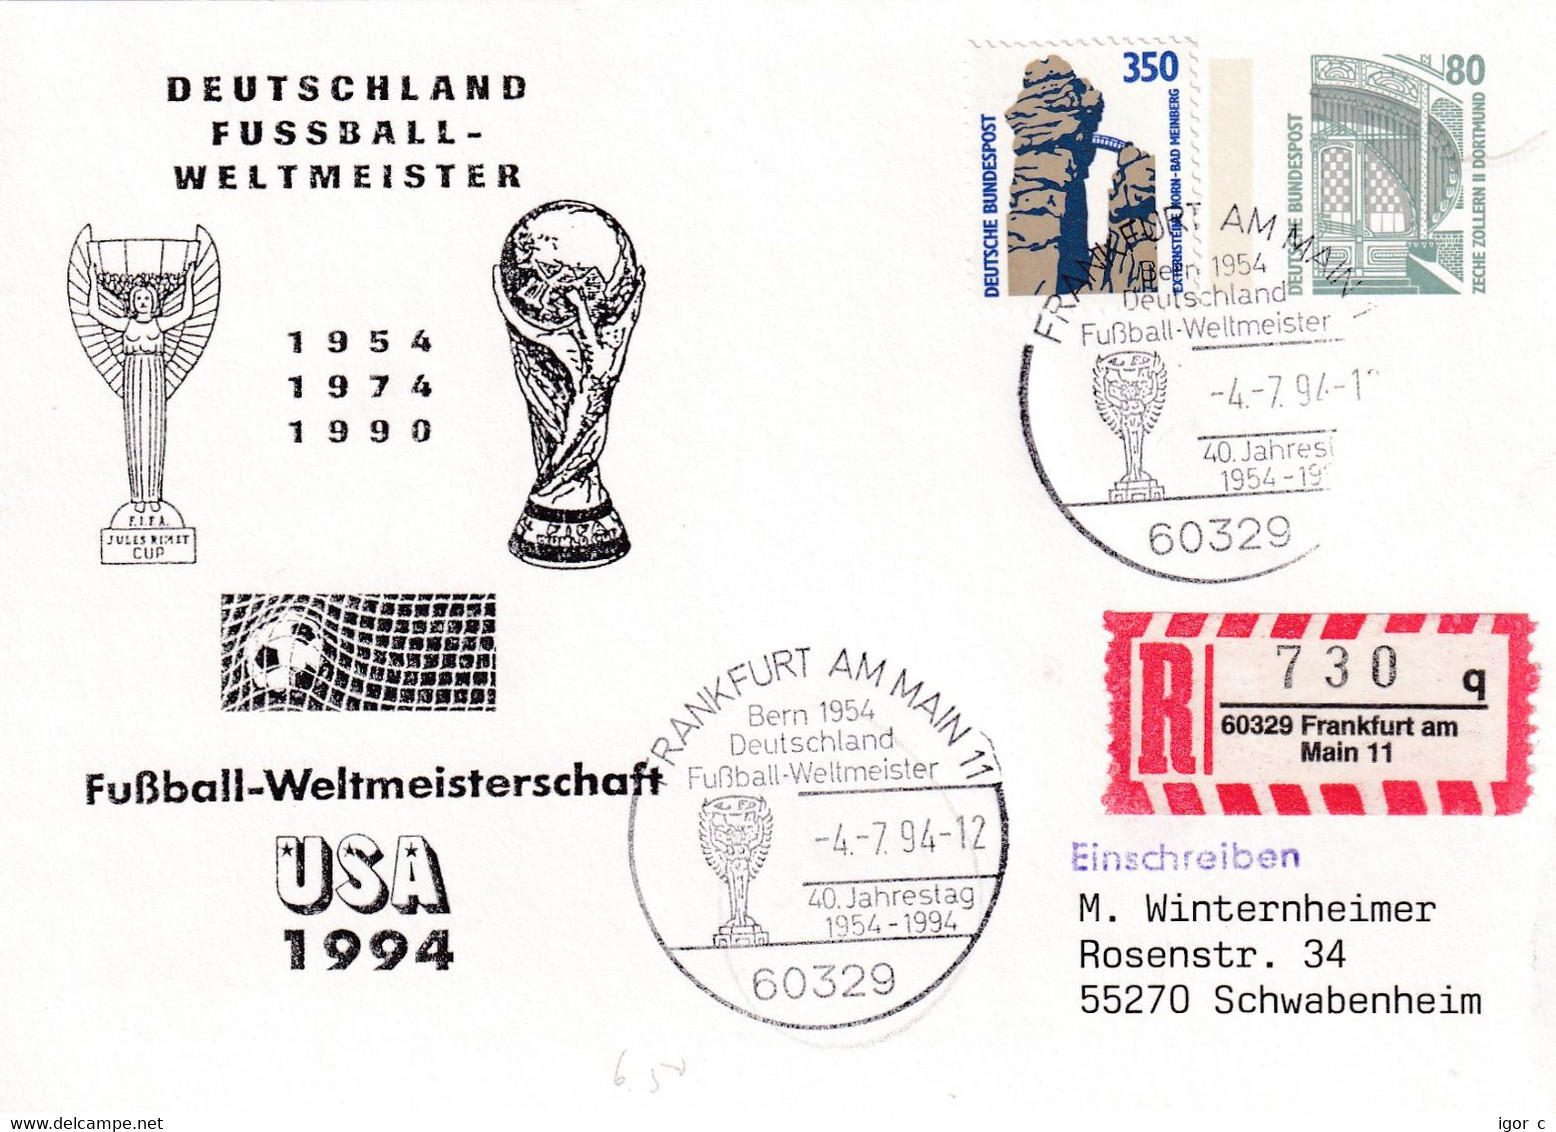 USA 1994 Registered Postal Stationery Card: Football Soccer Calcio Fussball; FIFA World Cup USA; Wunder Von Bern - 1954 – Schweiz